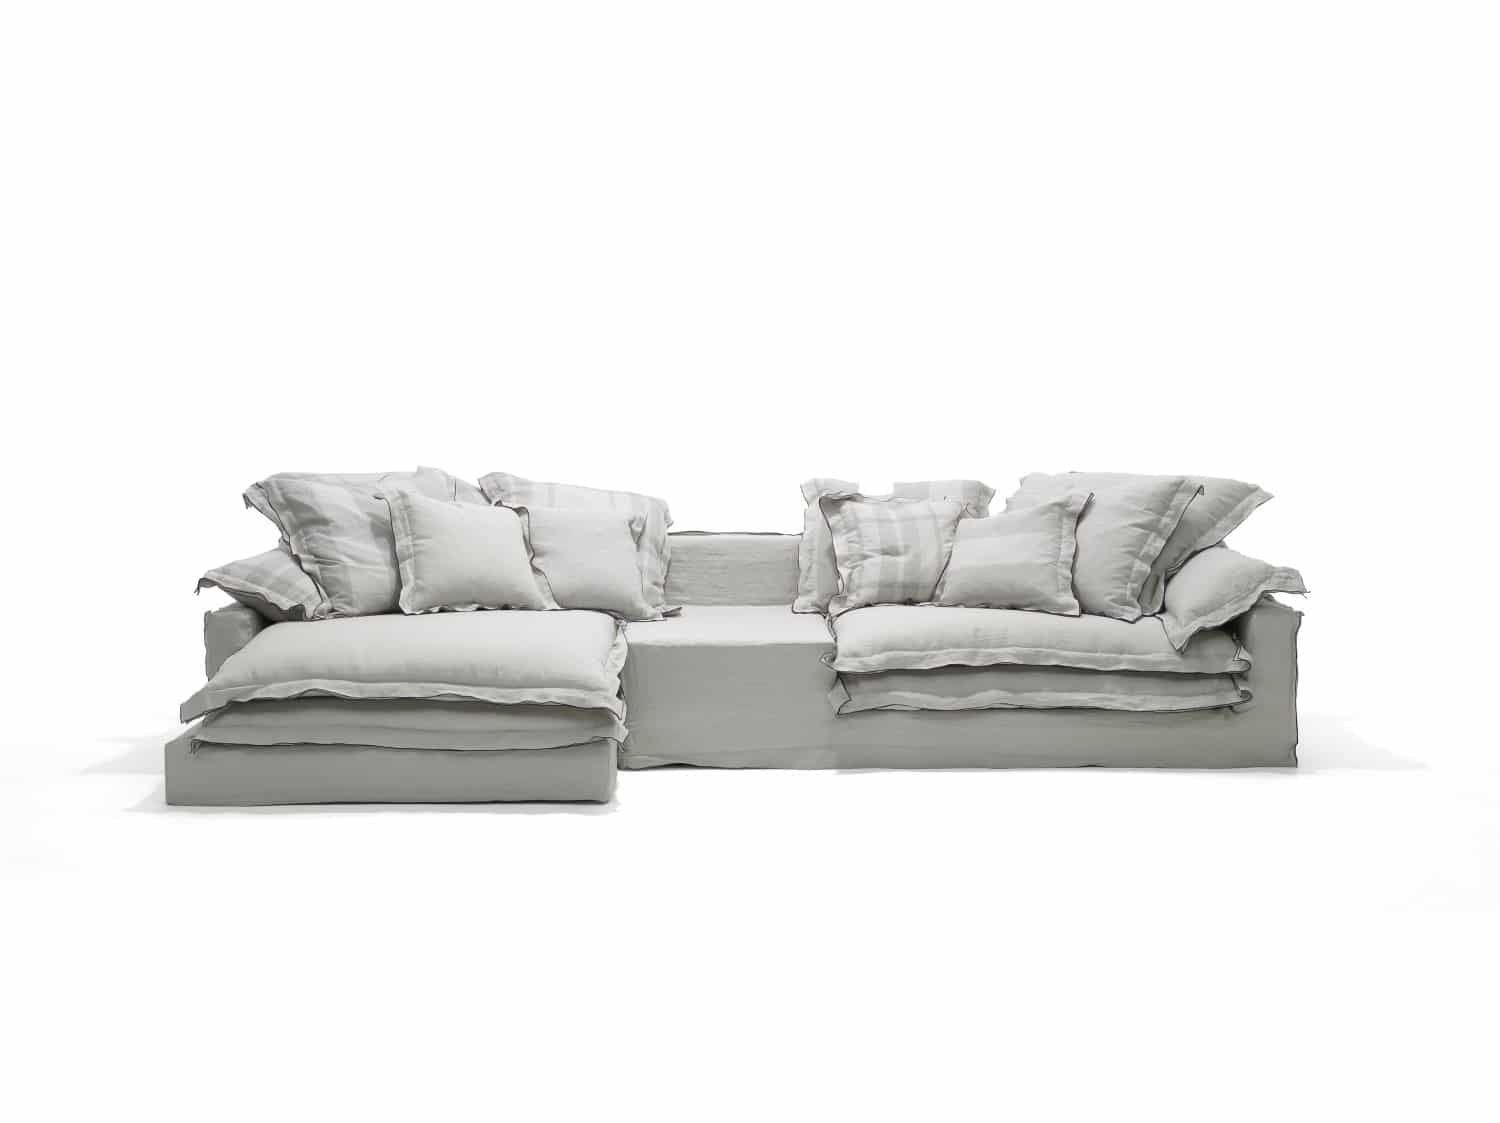 Linteloo-Jans-new-sofa-1.jpg